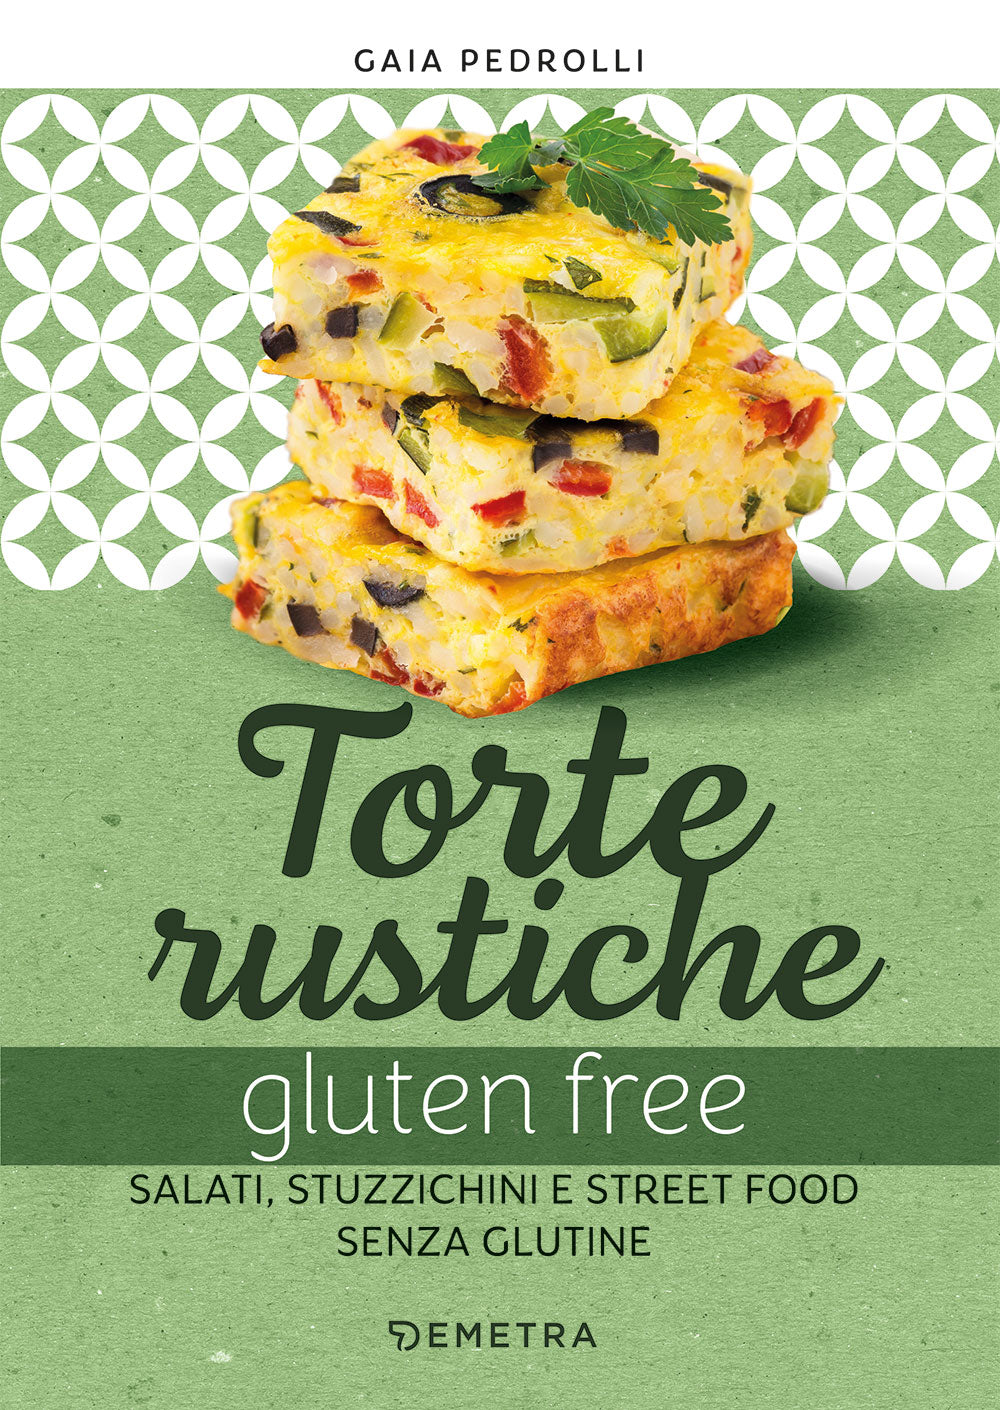 Torte rustiche e gluten free::Salati, stuzzichini e street food senza glutine